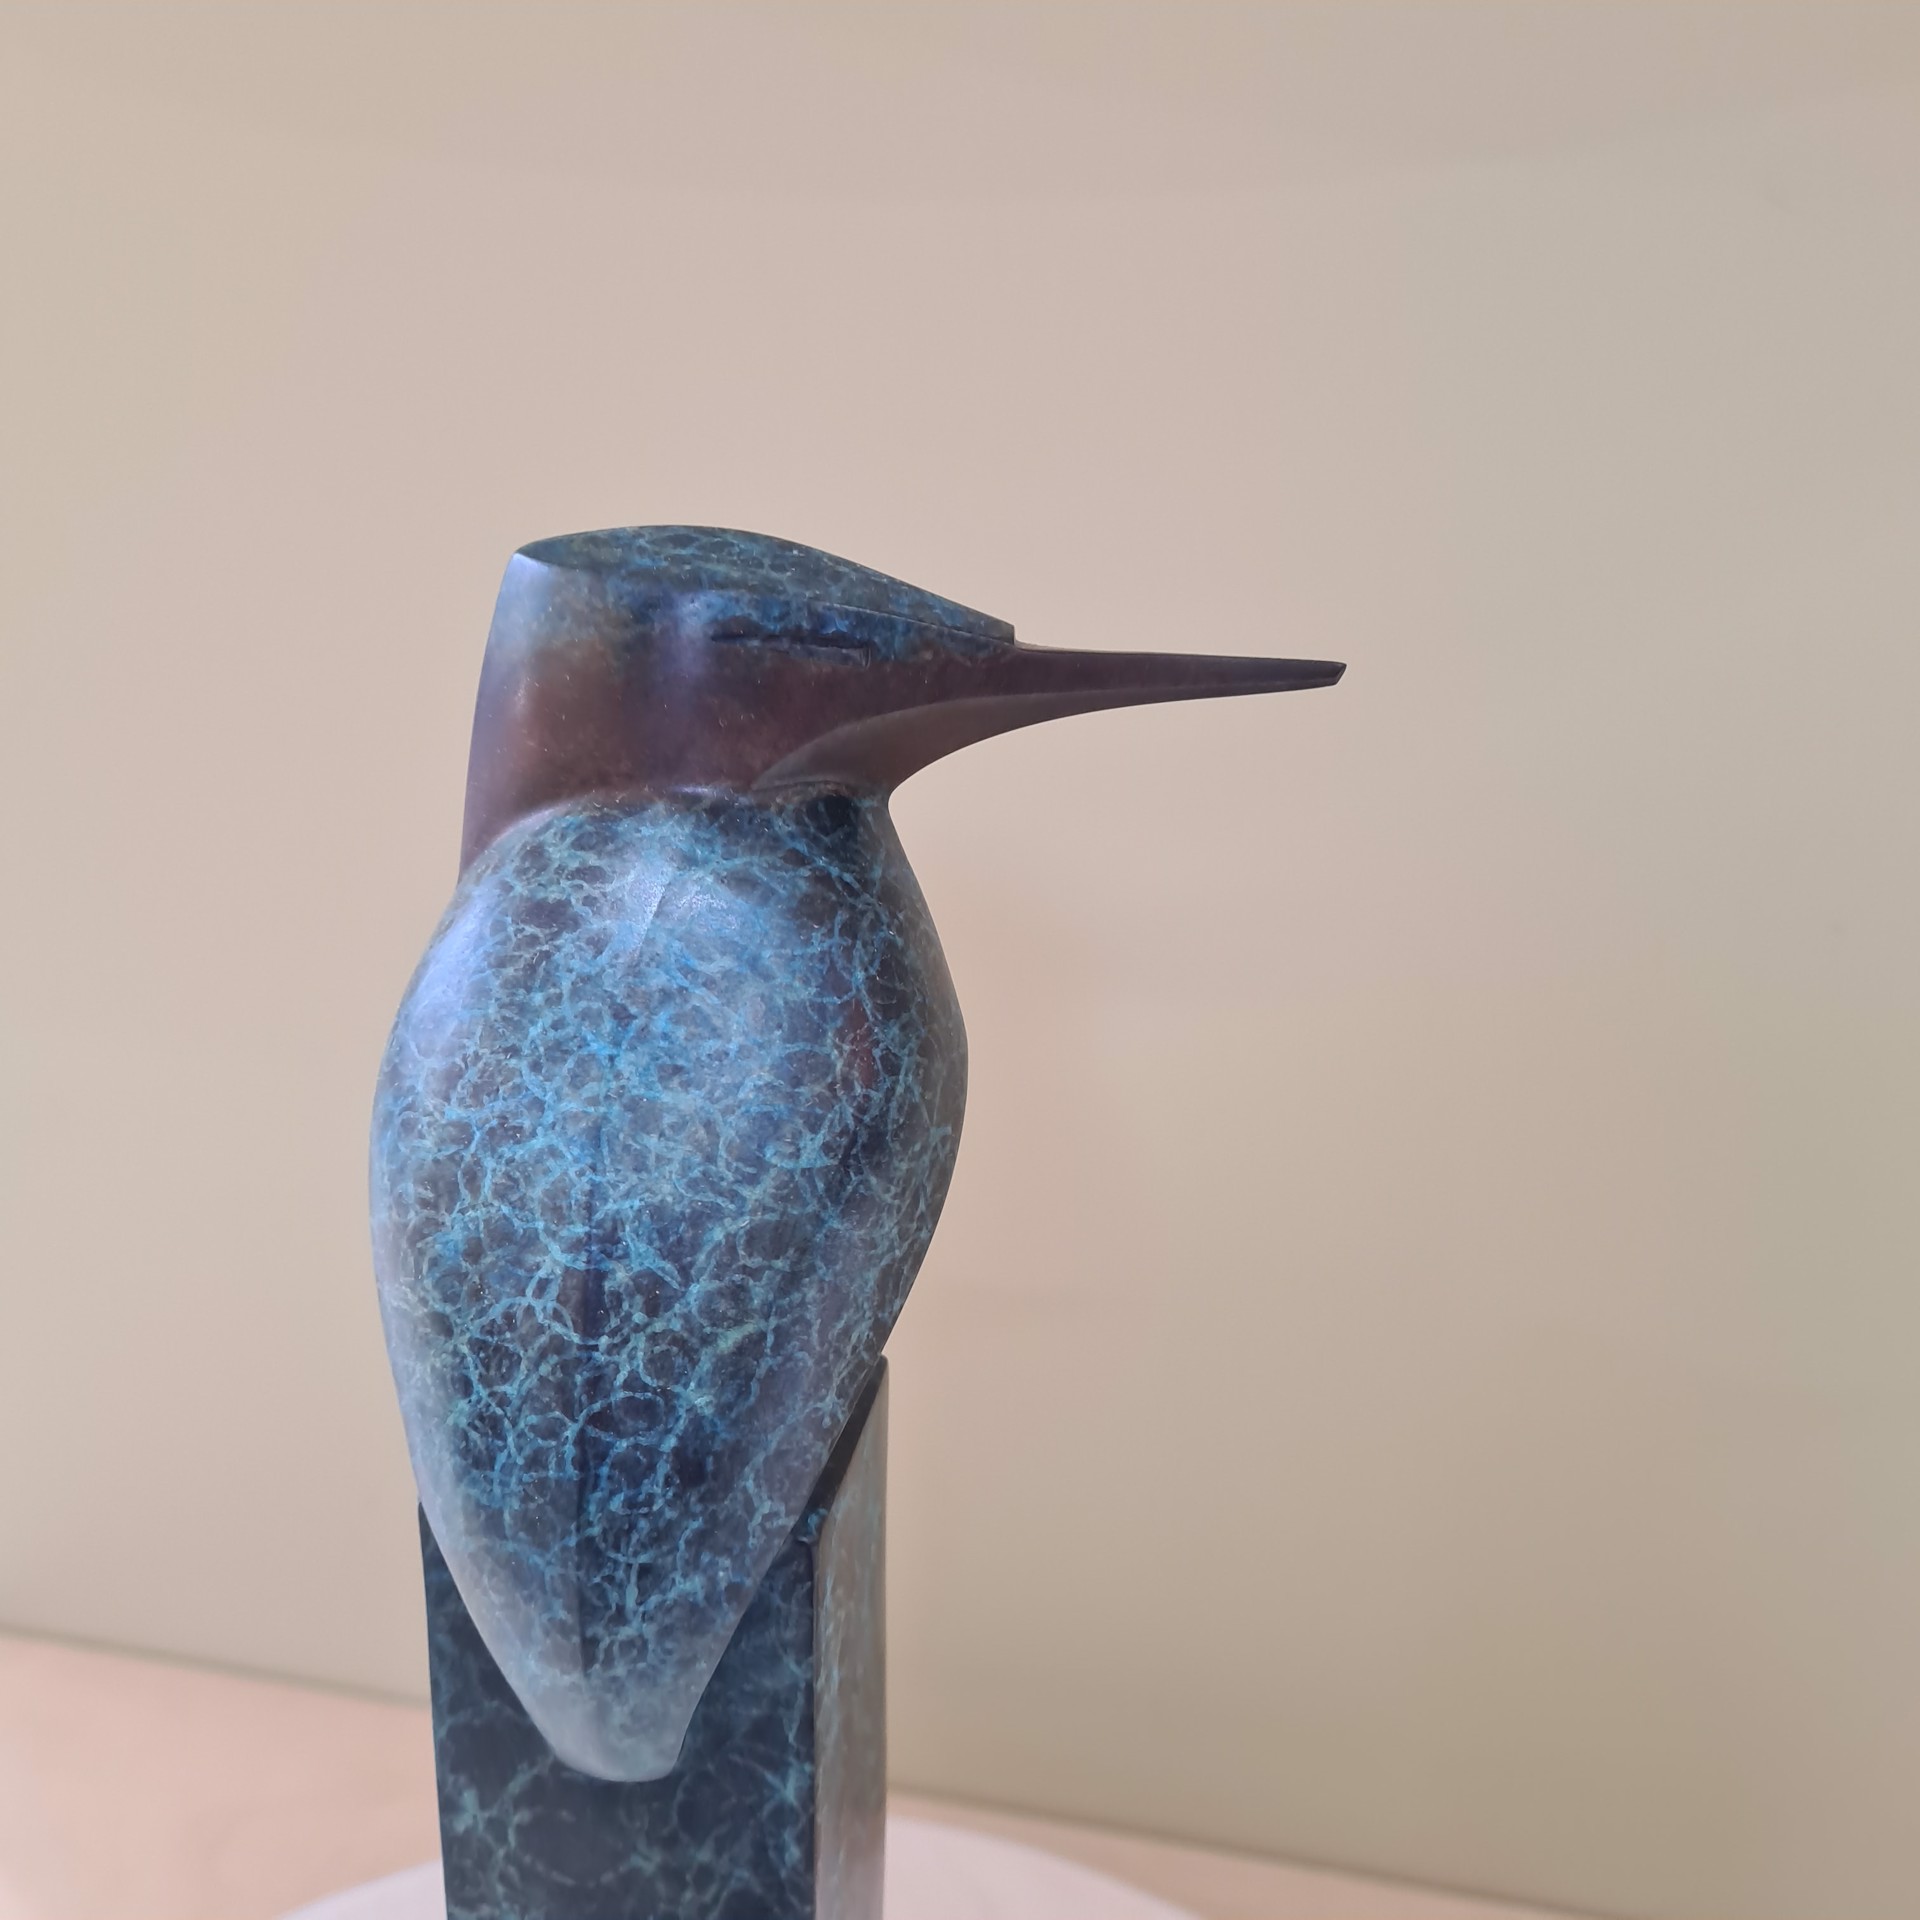 Kingfisher by Paul Harvey